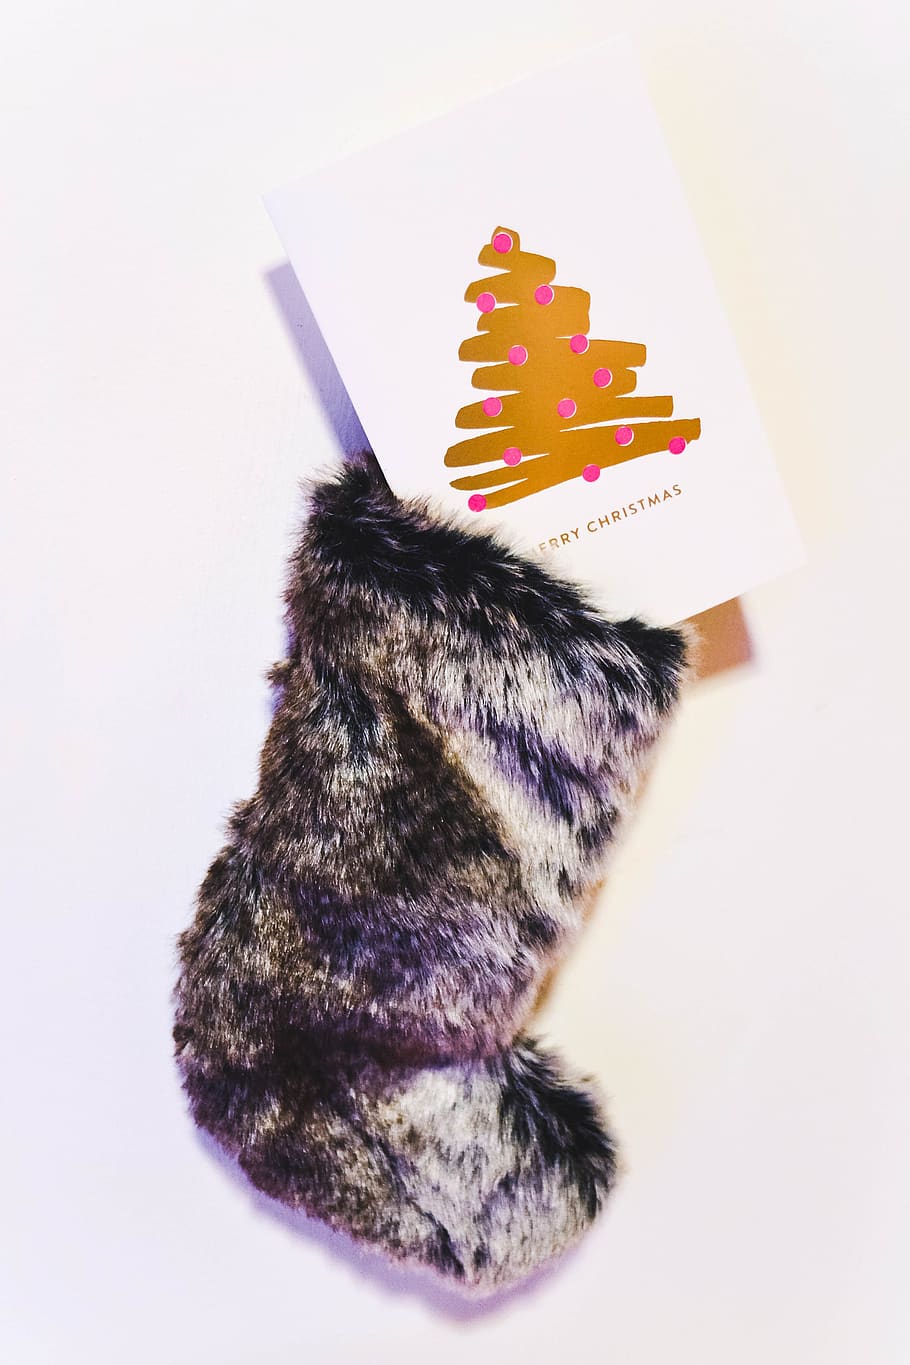 An XMAS sock with a Christmas card inside., canada, toronto, christmas stocking, HD wallpaper